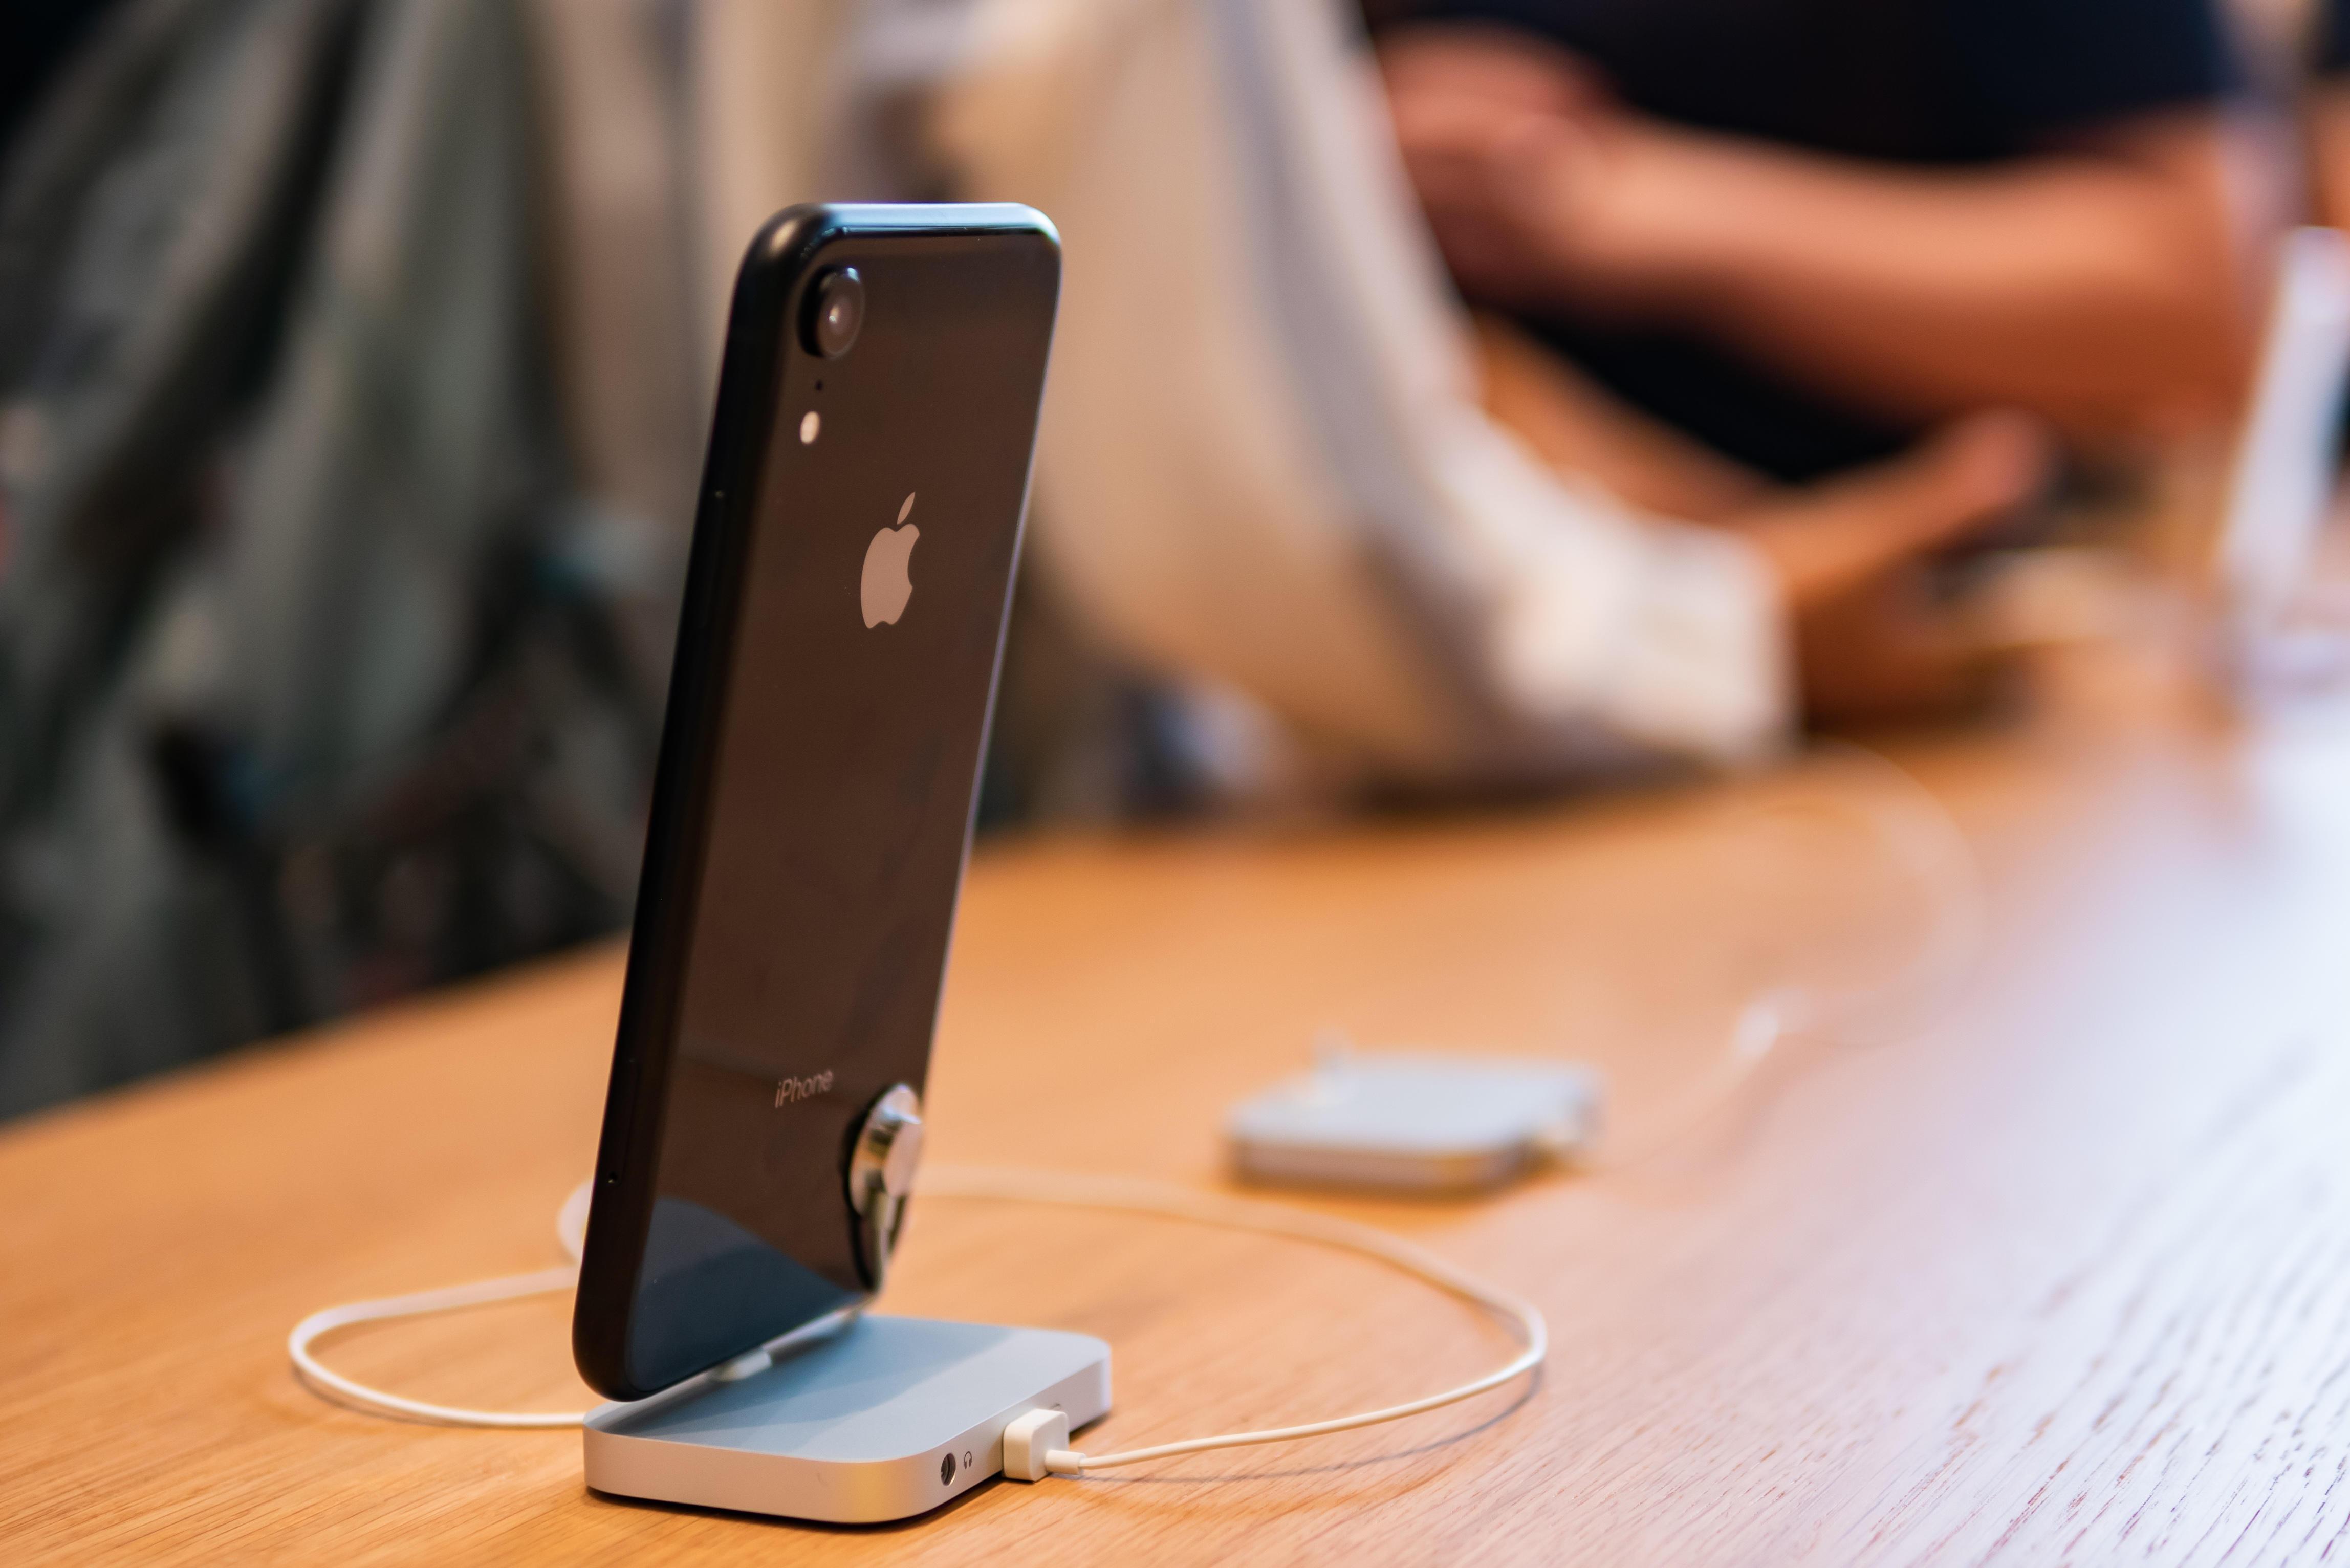  Apple akan memberi hadiah $ 1 juta kepada siapa saja yang dapat meretas iPhone dalam uji berani sistem keamanan mereka